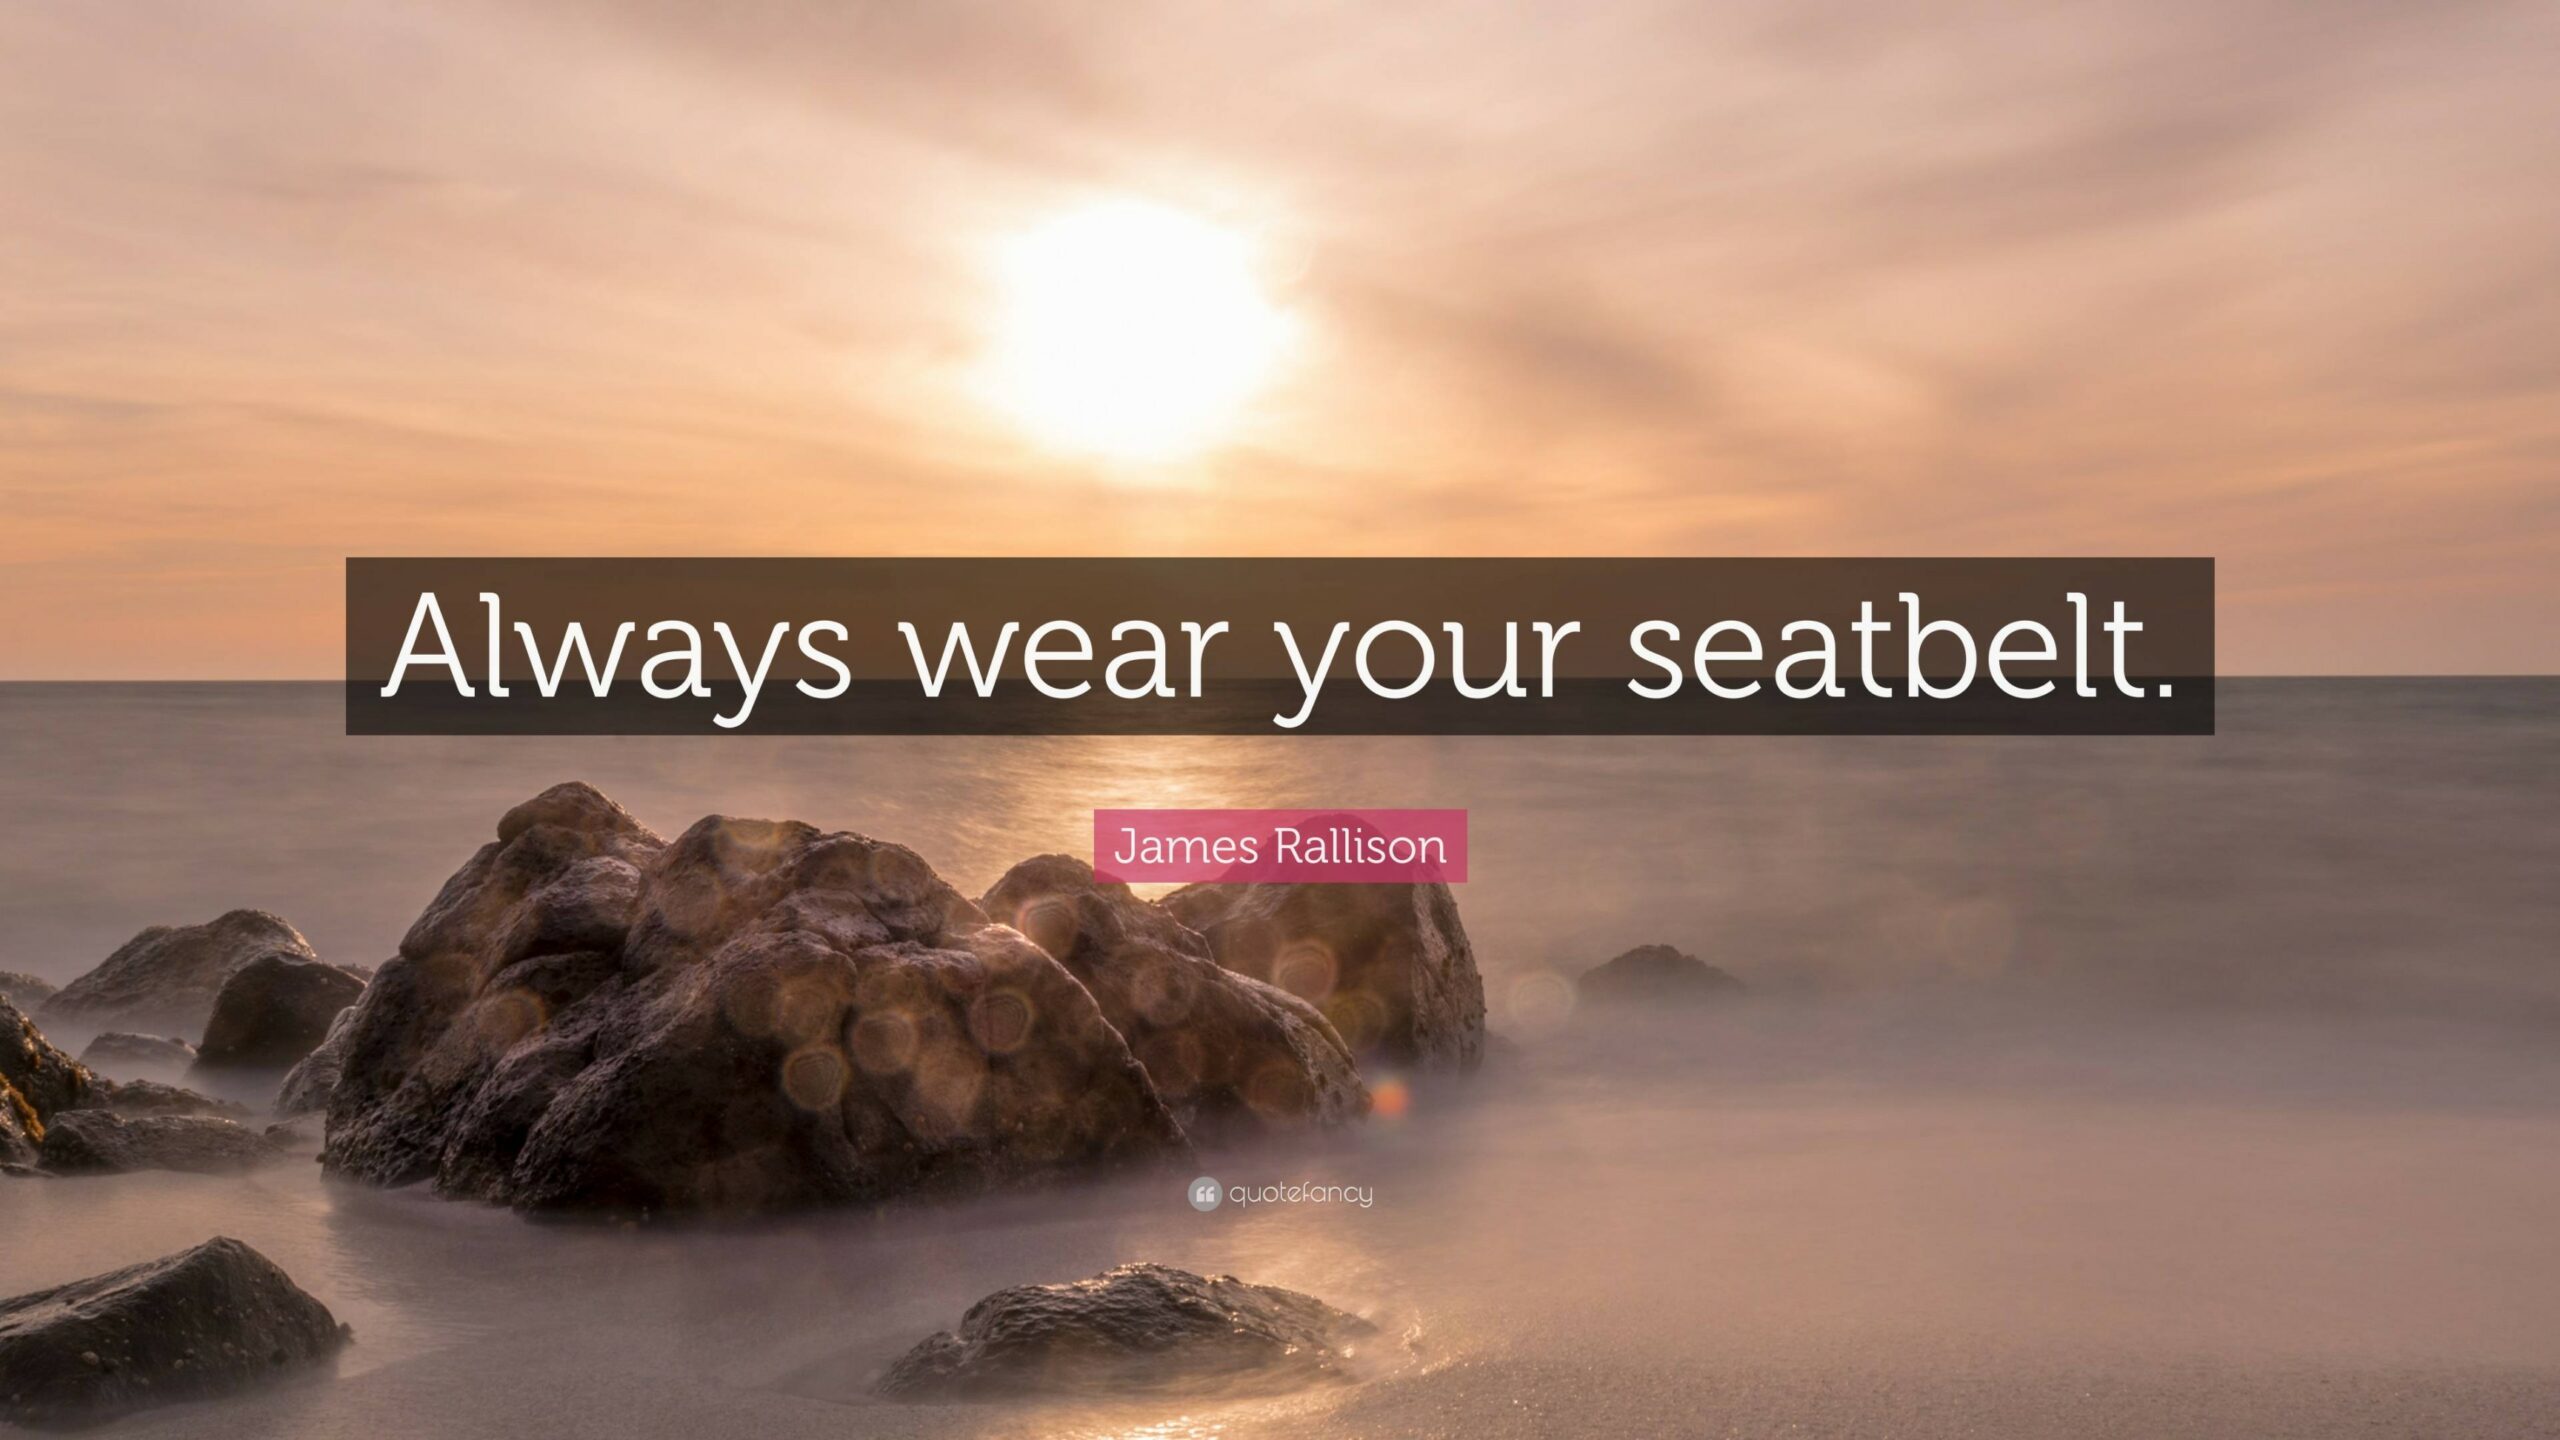 James Rallison Quote: “Always wear your seatbelt